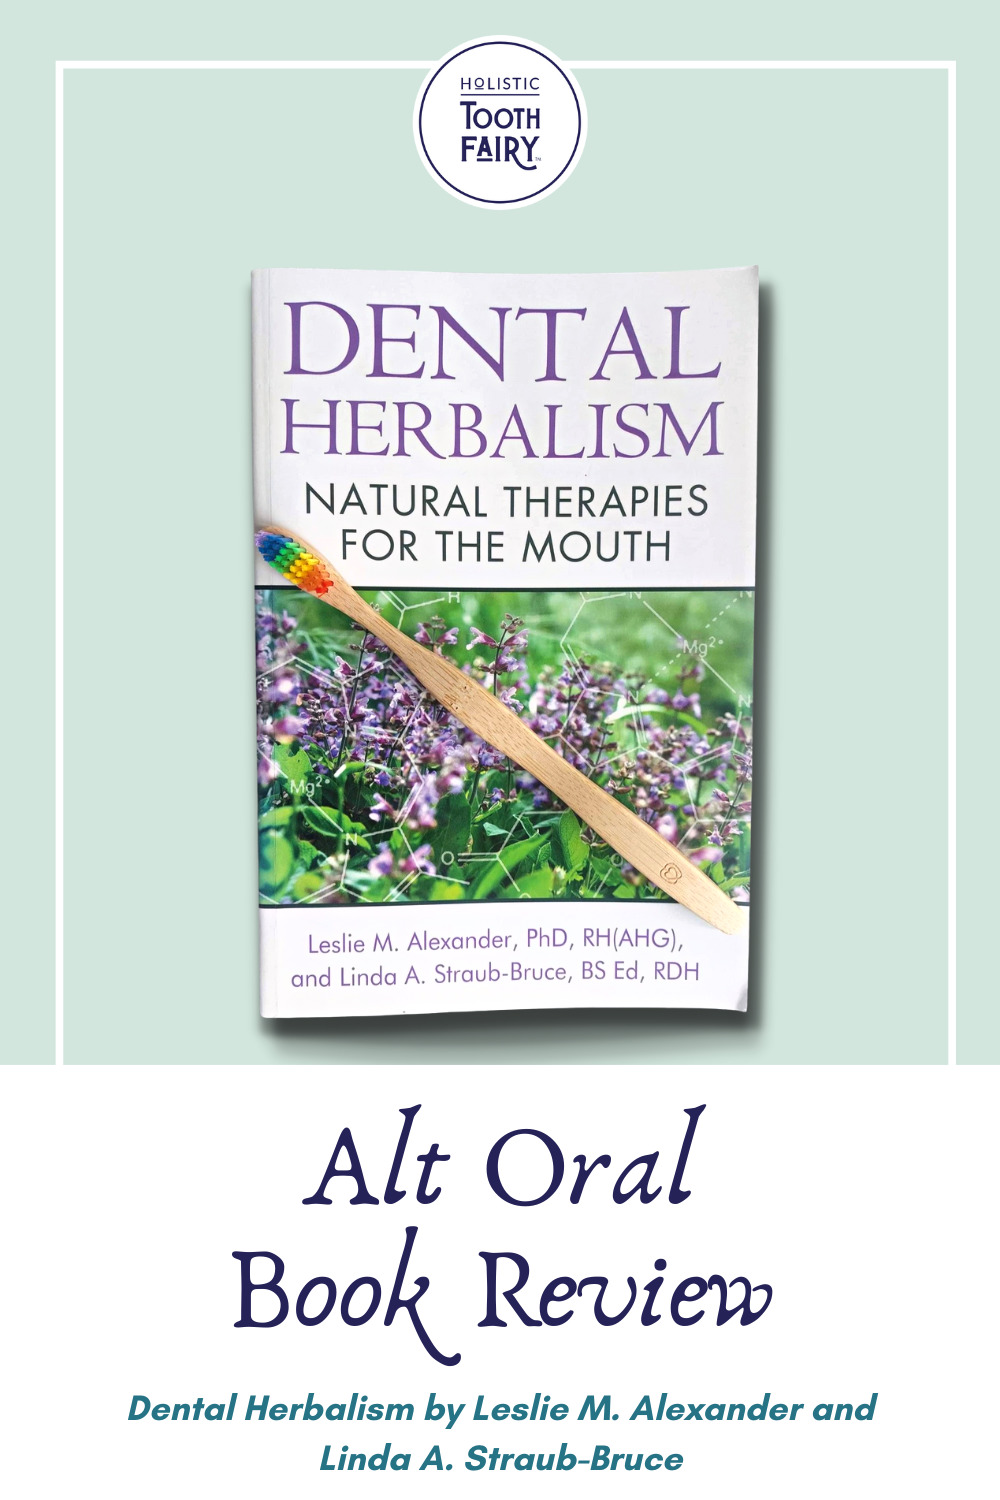 Alt oral book review